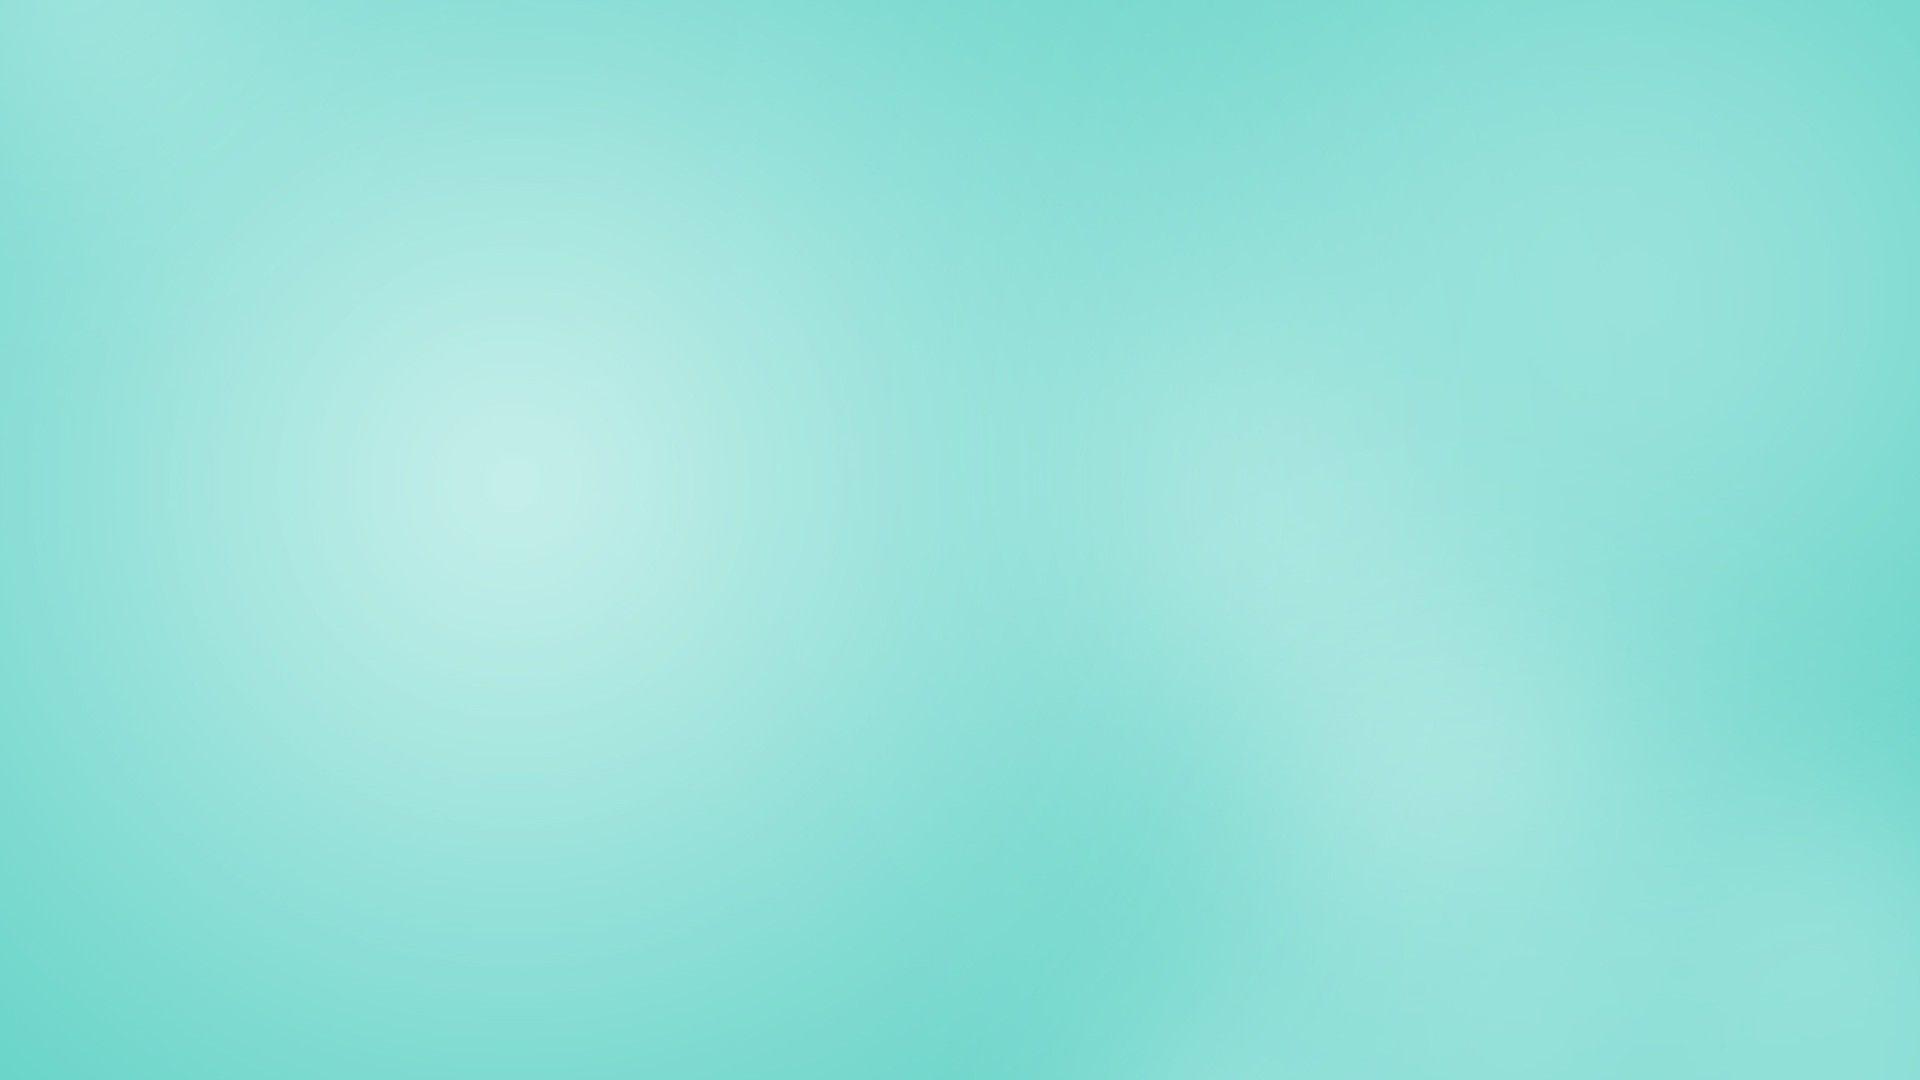 Mint Green Desktop Wallpapers - Top Free Mint Green Desktop Backgrounds